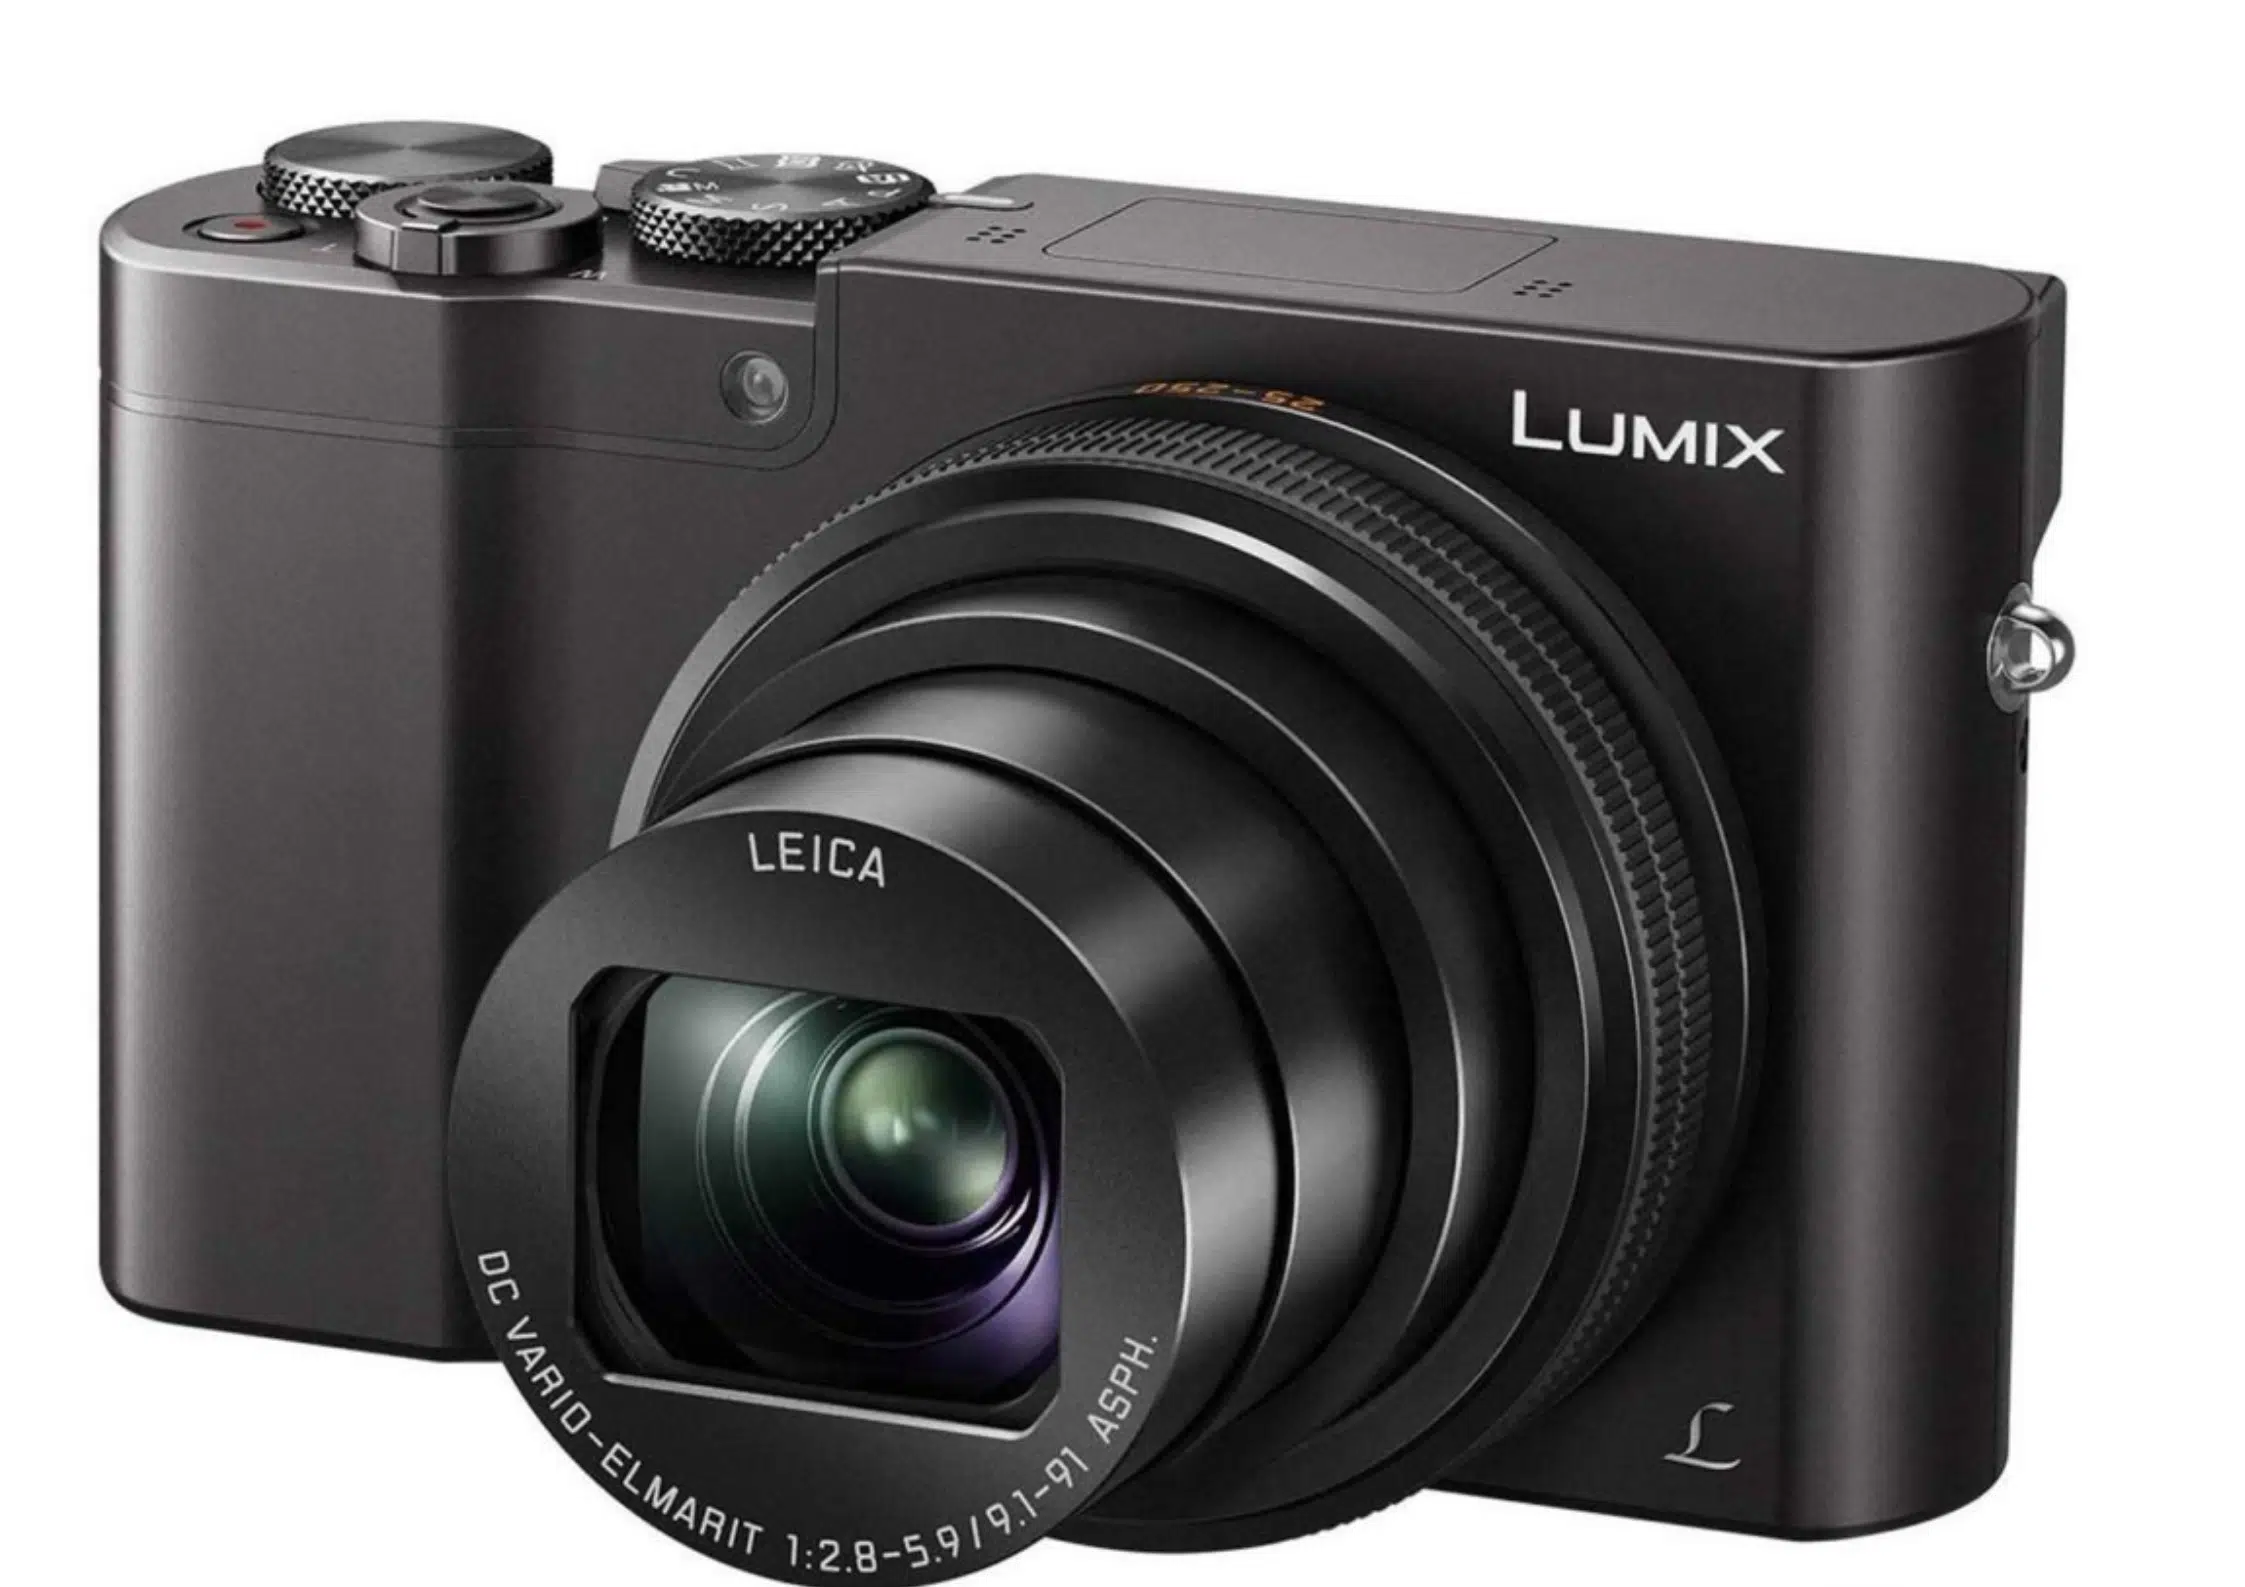 Panasonic Lumix - Best compact camera for beginners